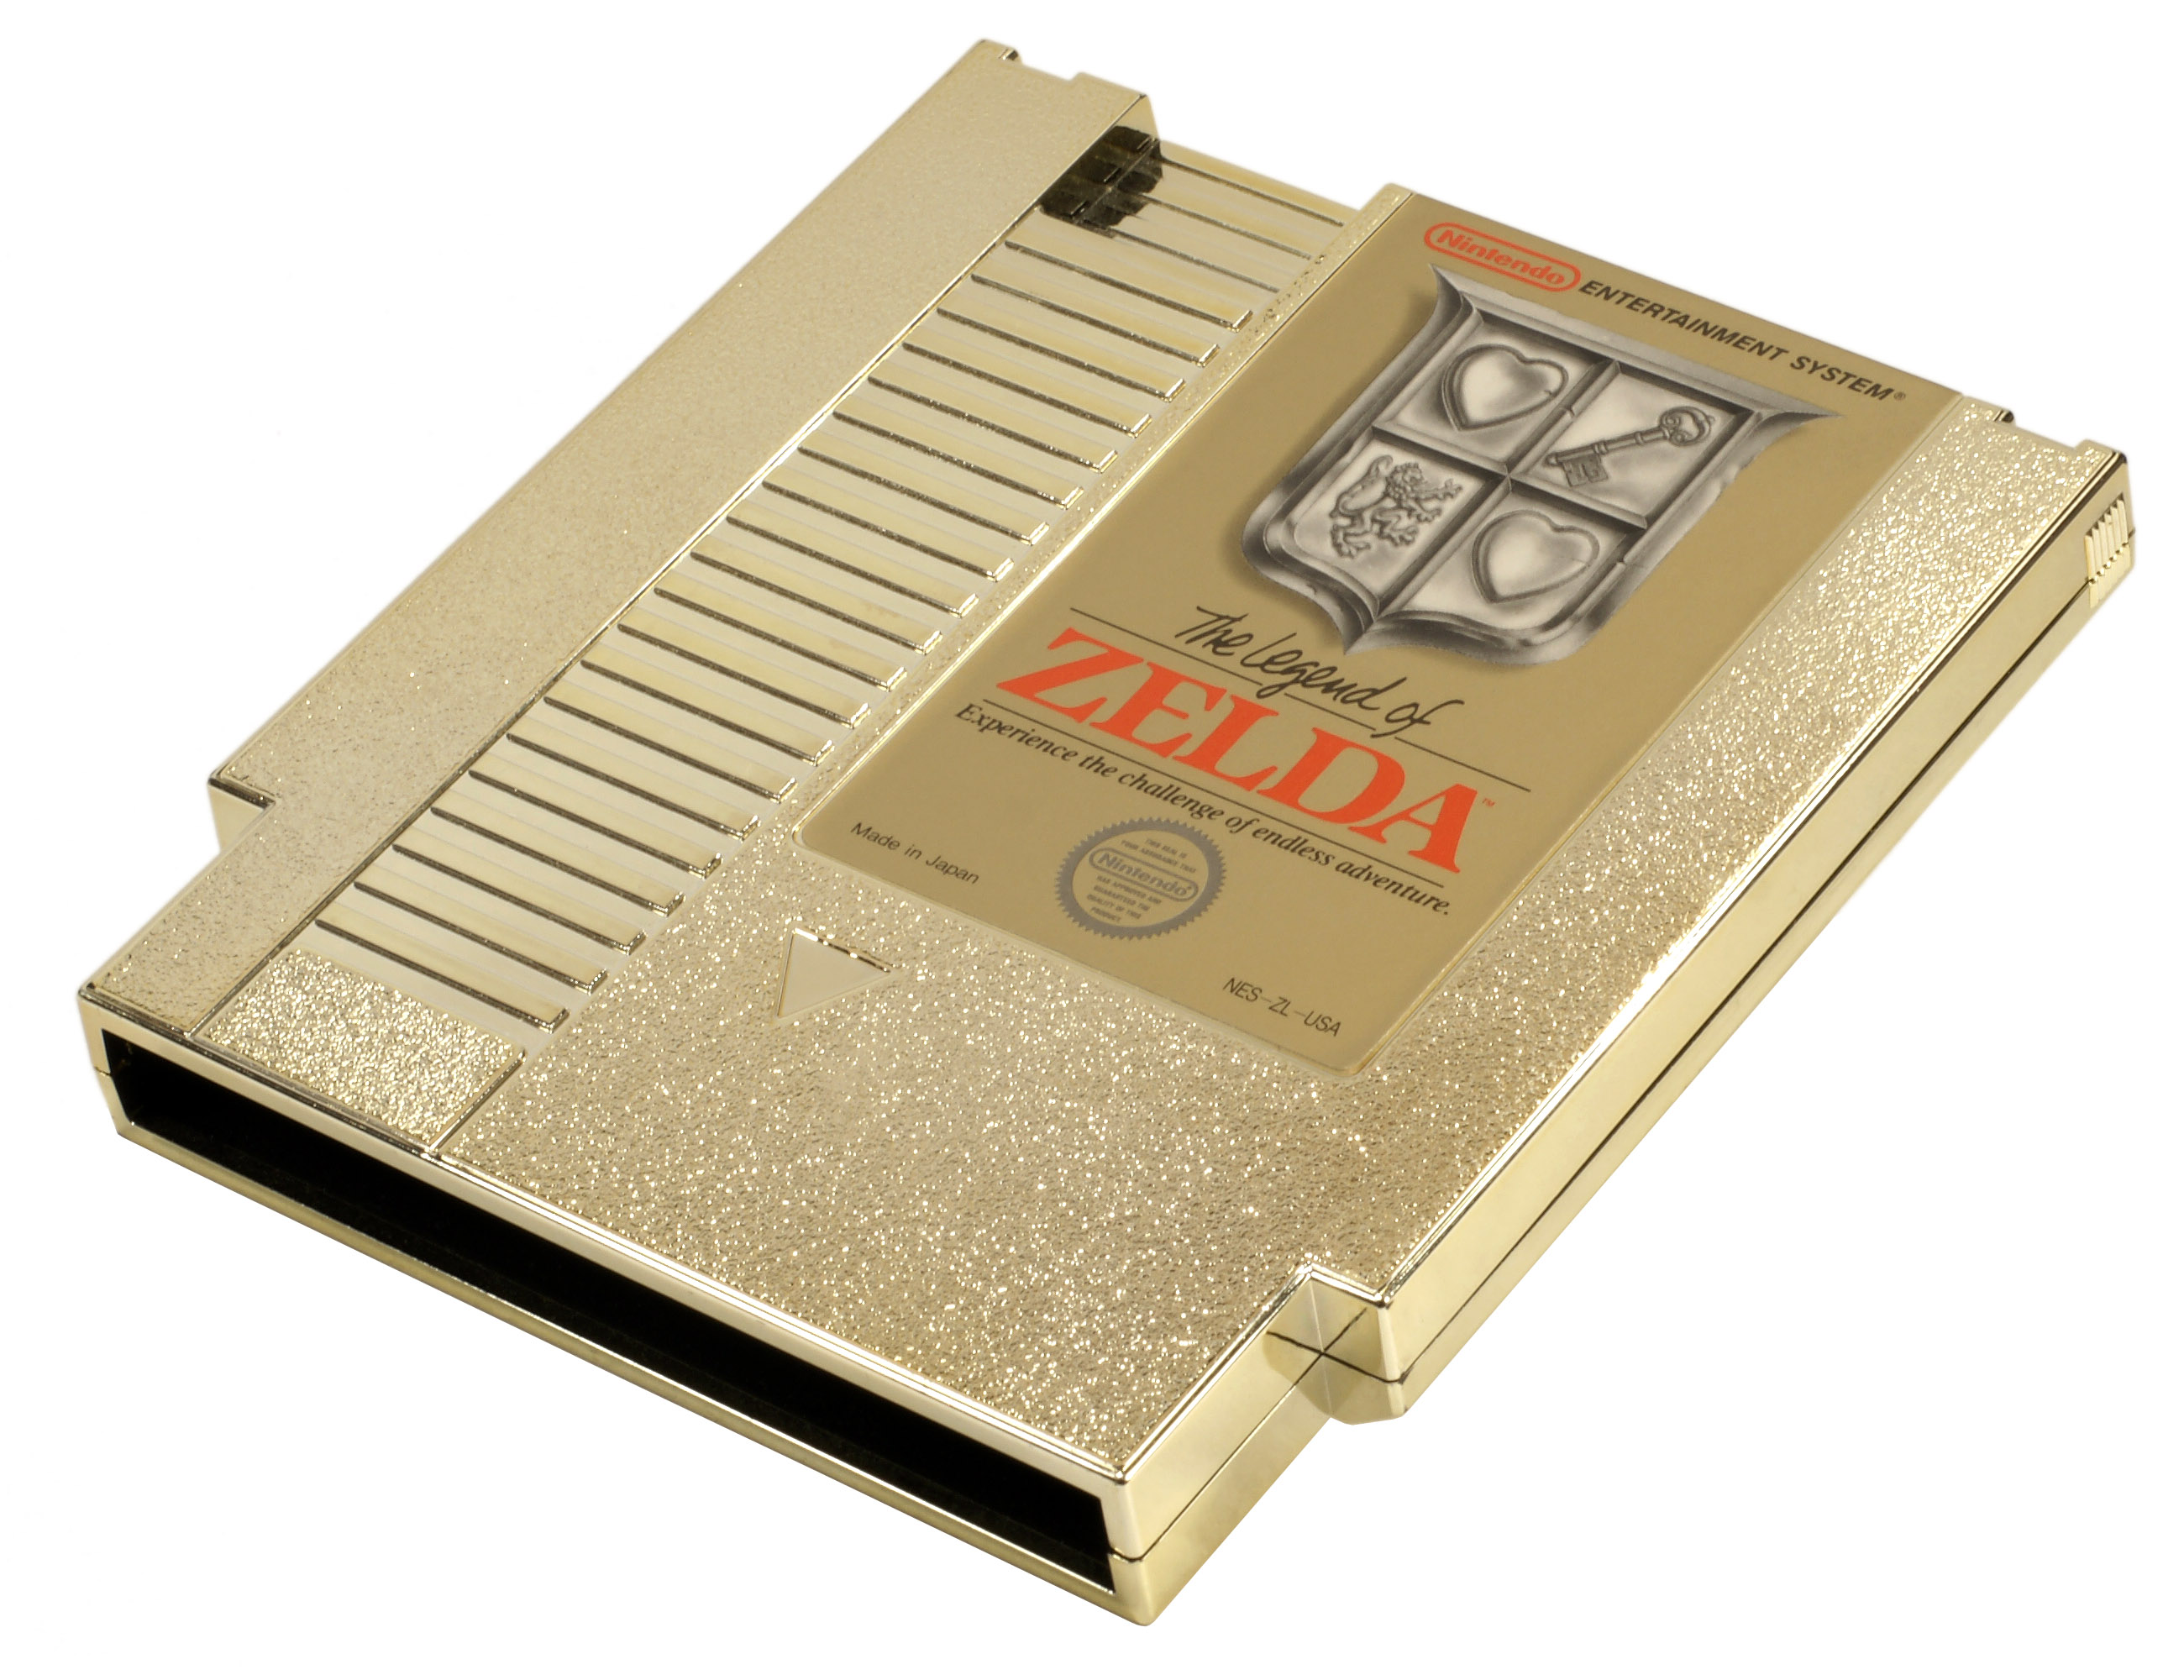 original gold zelda cartridge